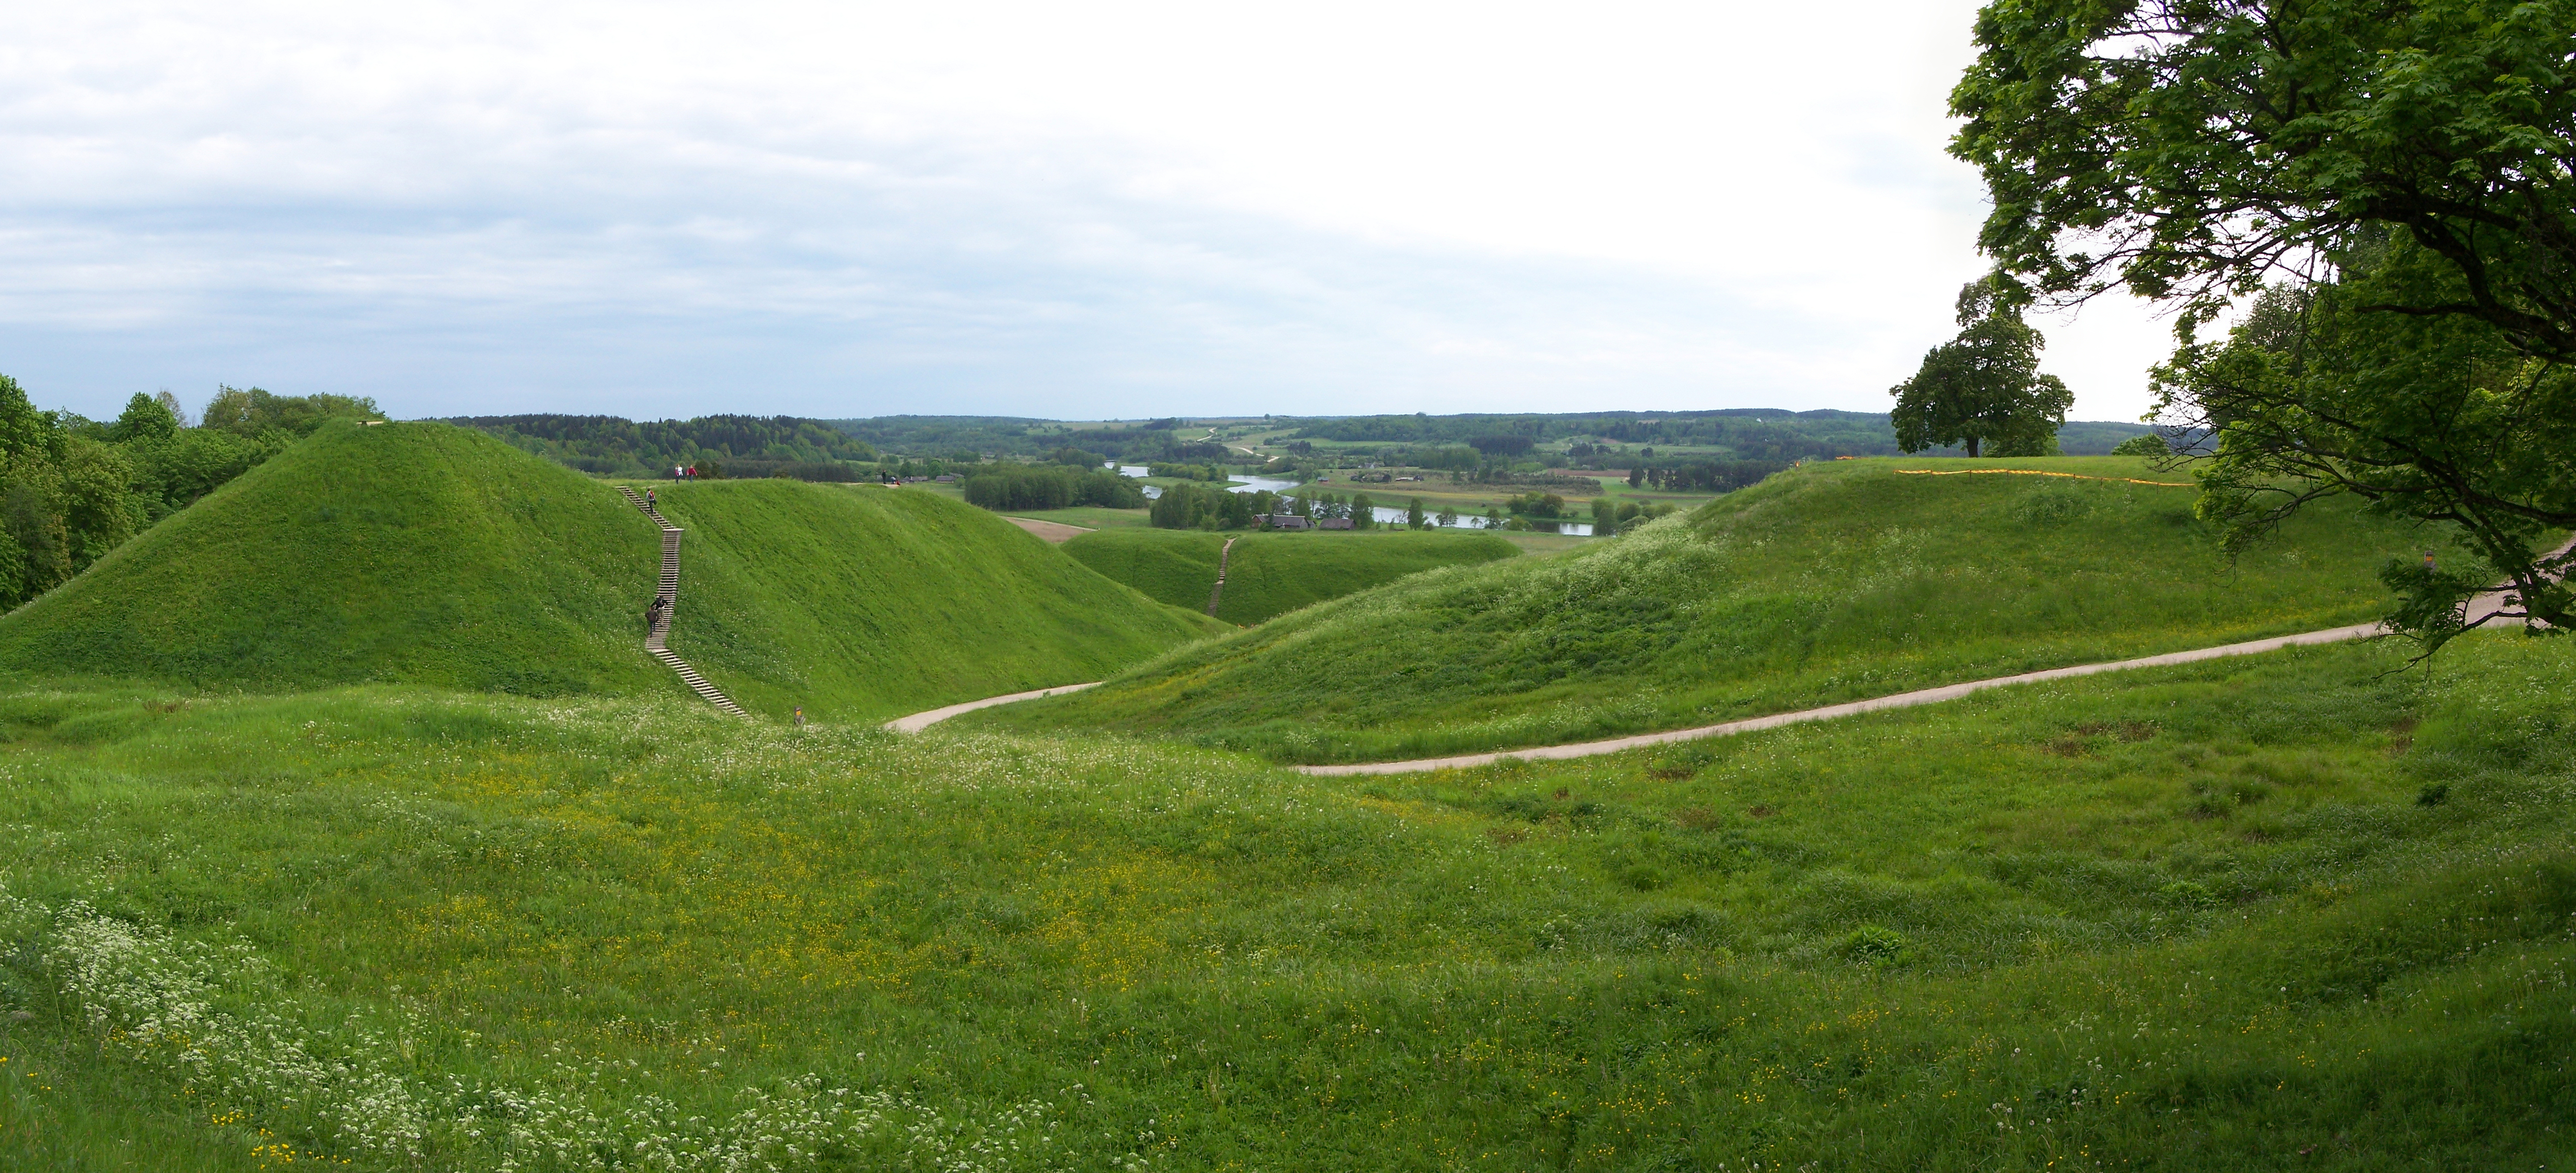 File:Kernavė - Hill forts 01.jpg - Wikimedia Commons